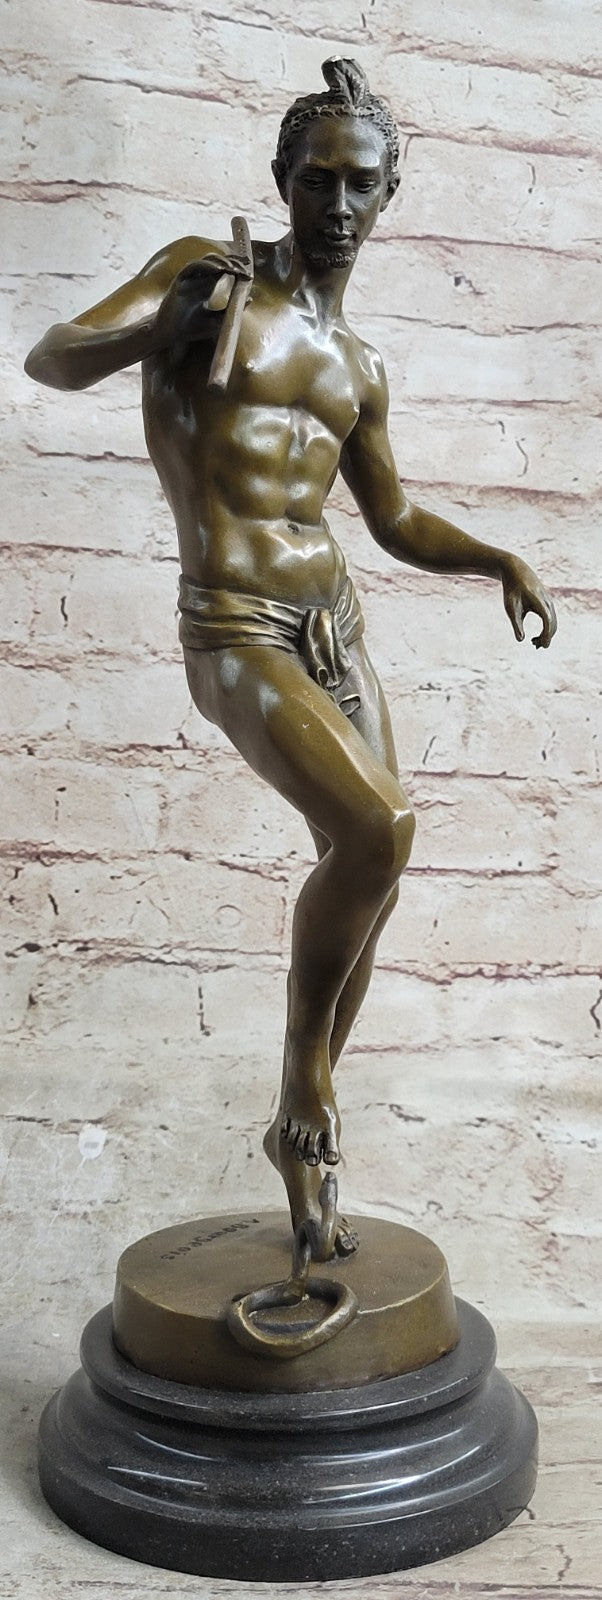 Art Deco Semi Nude Male Playing Music Snake Bronze Figurine Home Decorative GIFT